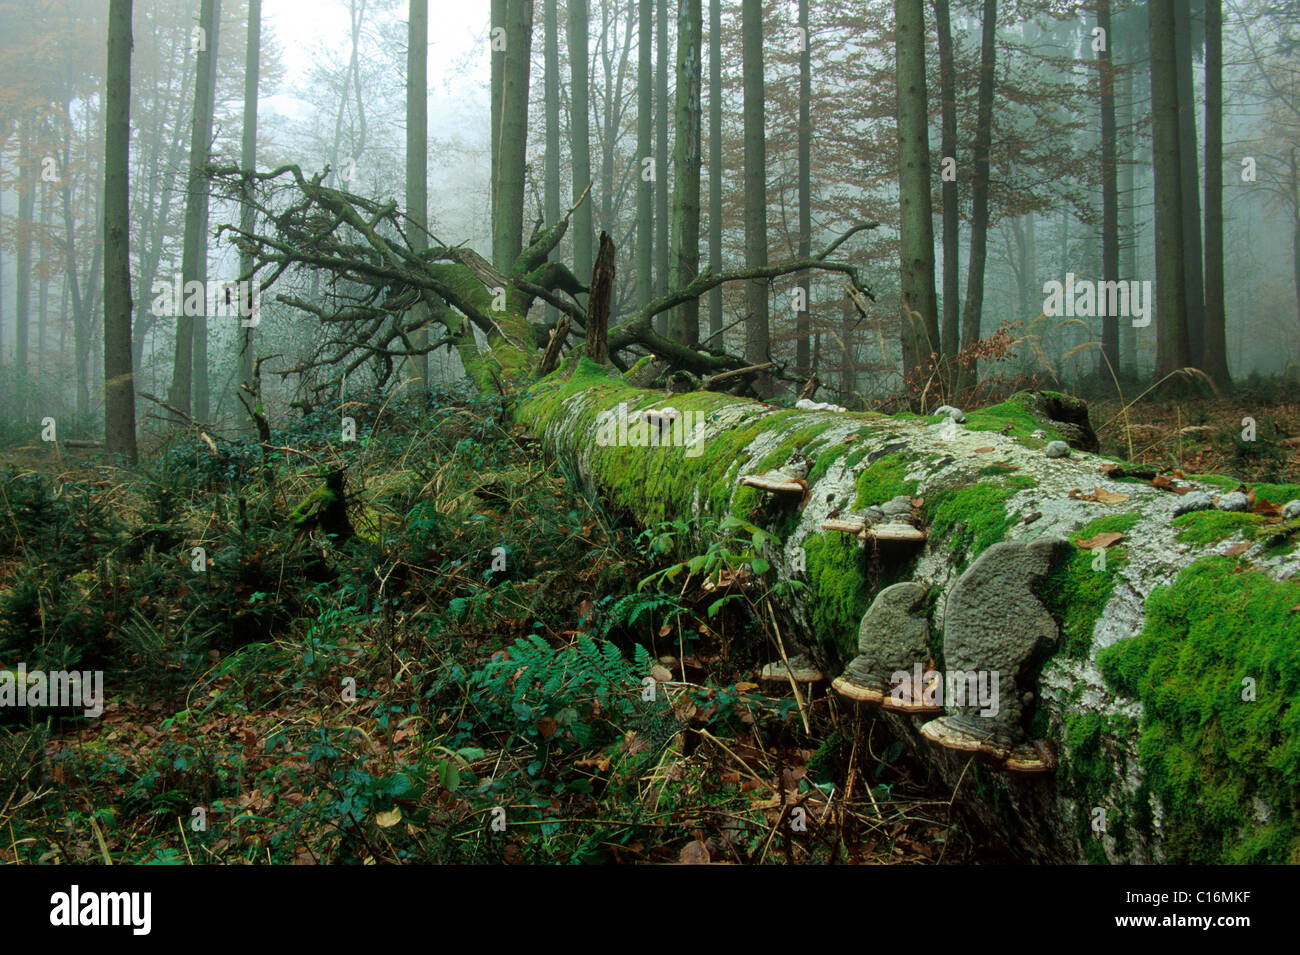 Deadwood Beech (Fagus sylvatica) overgrown with moss and fungus Stock Photo